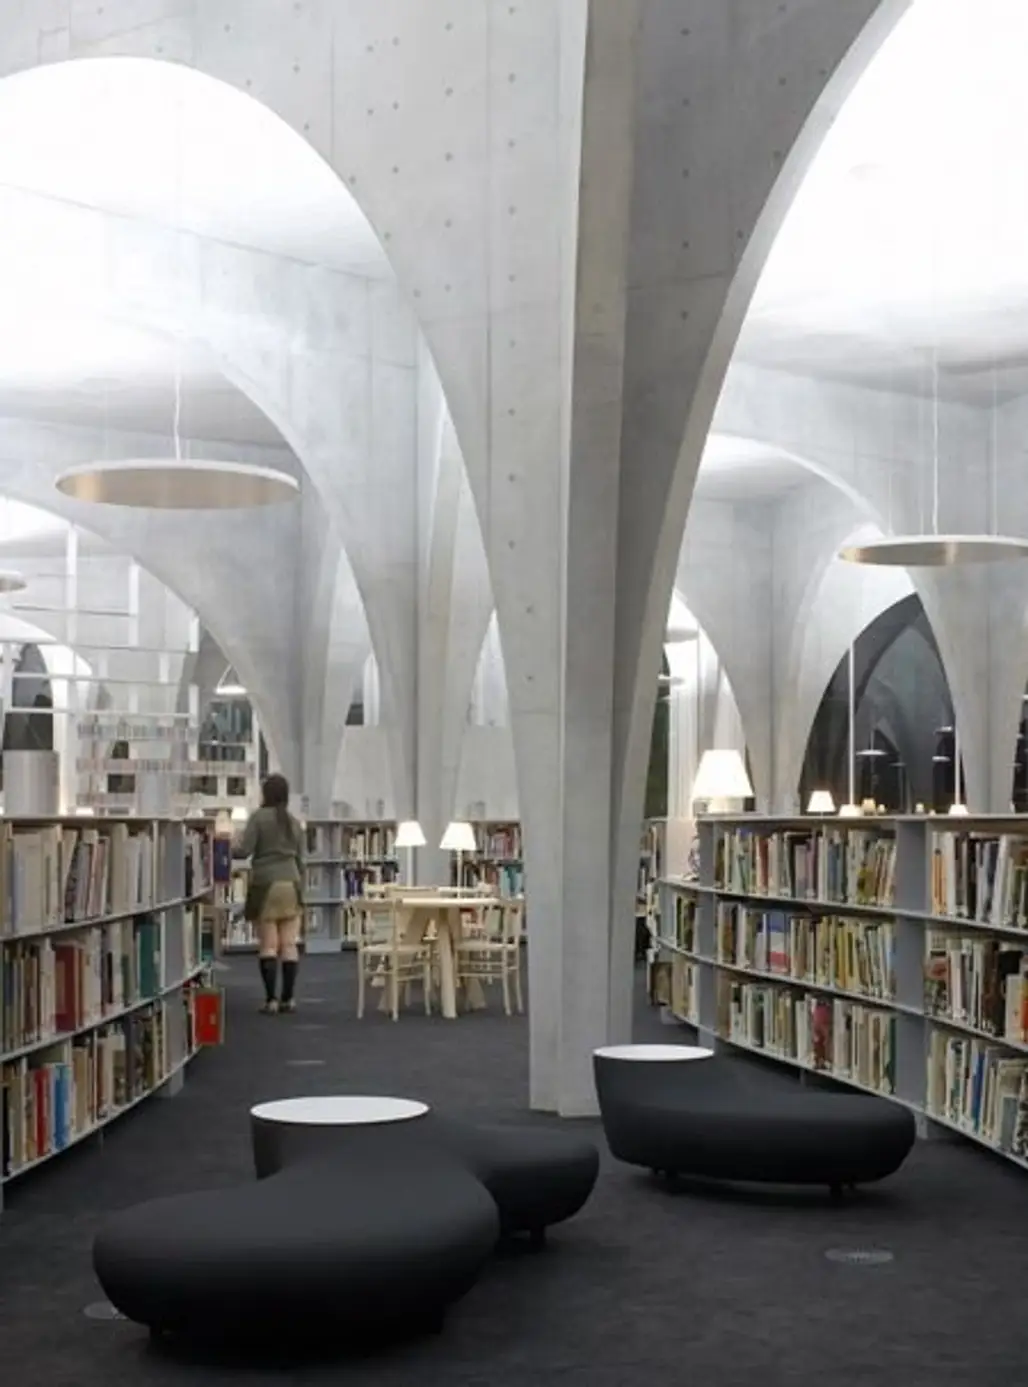 Tama Art University Library—Japan